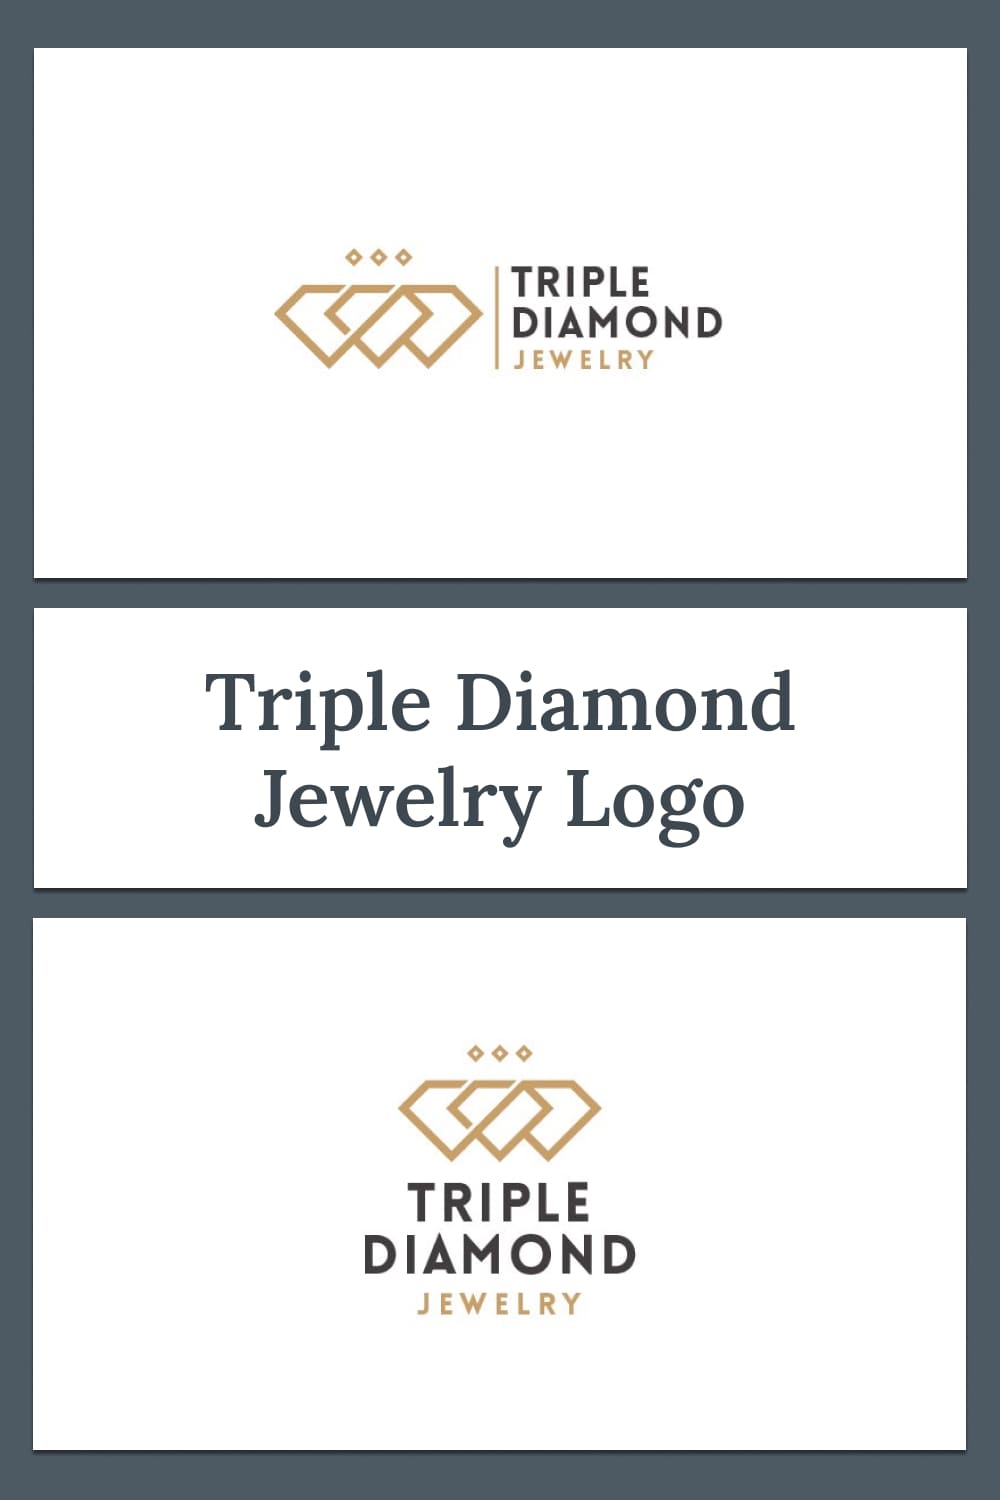 Triple Diamond Jewelry Logo Design Template pinterest image.